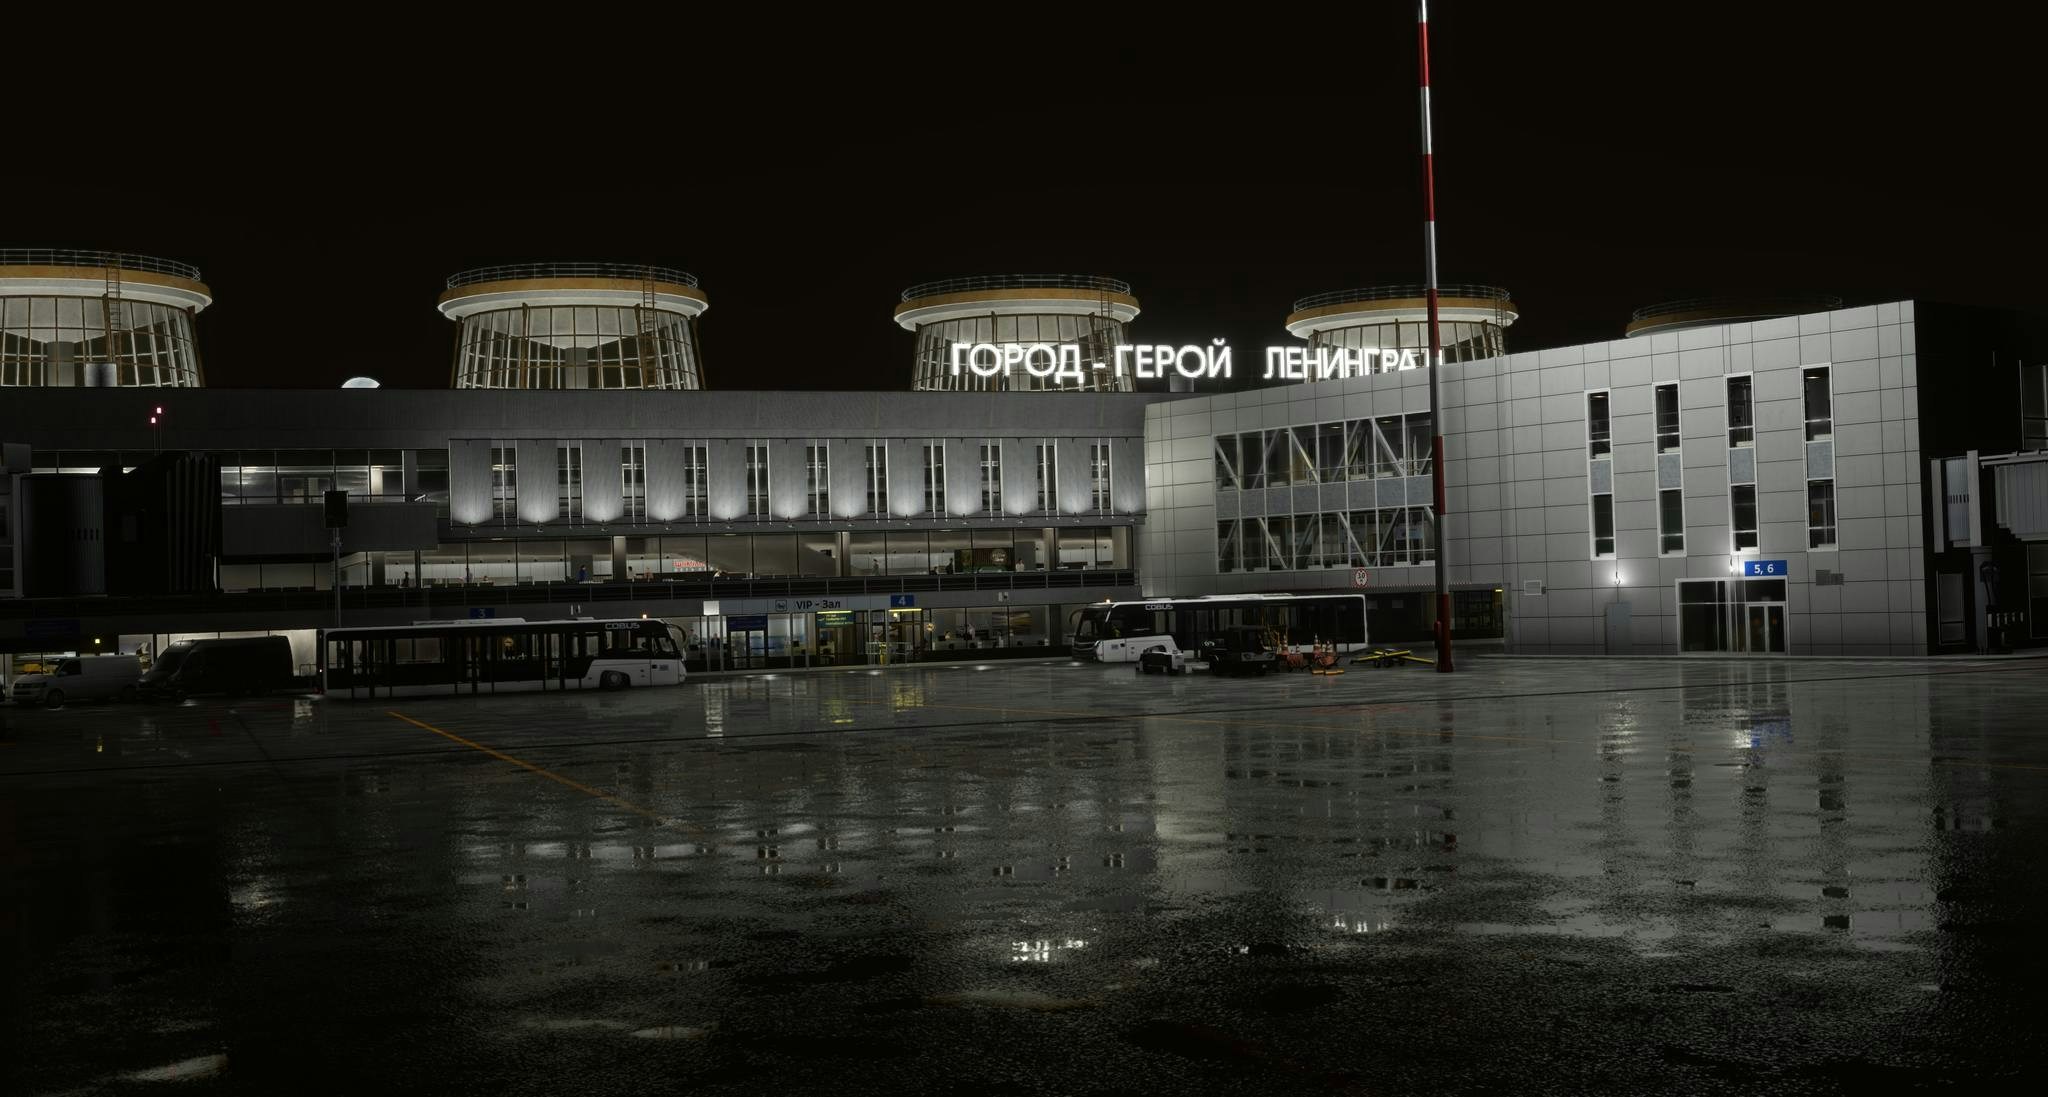 Digital Designs Provides Airport Saint-Petersburg Pulkovo ULLI Previews